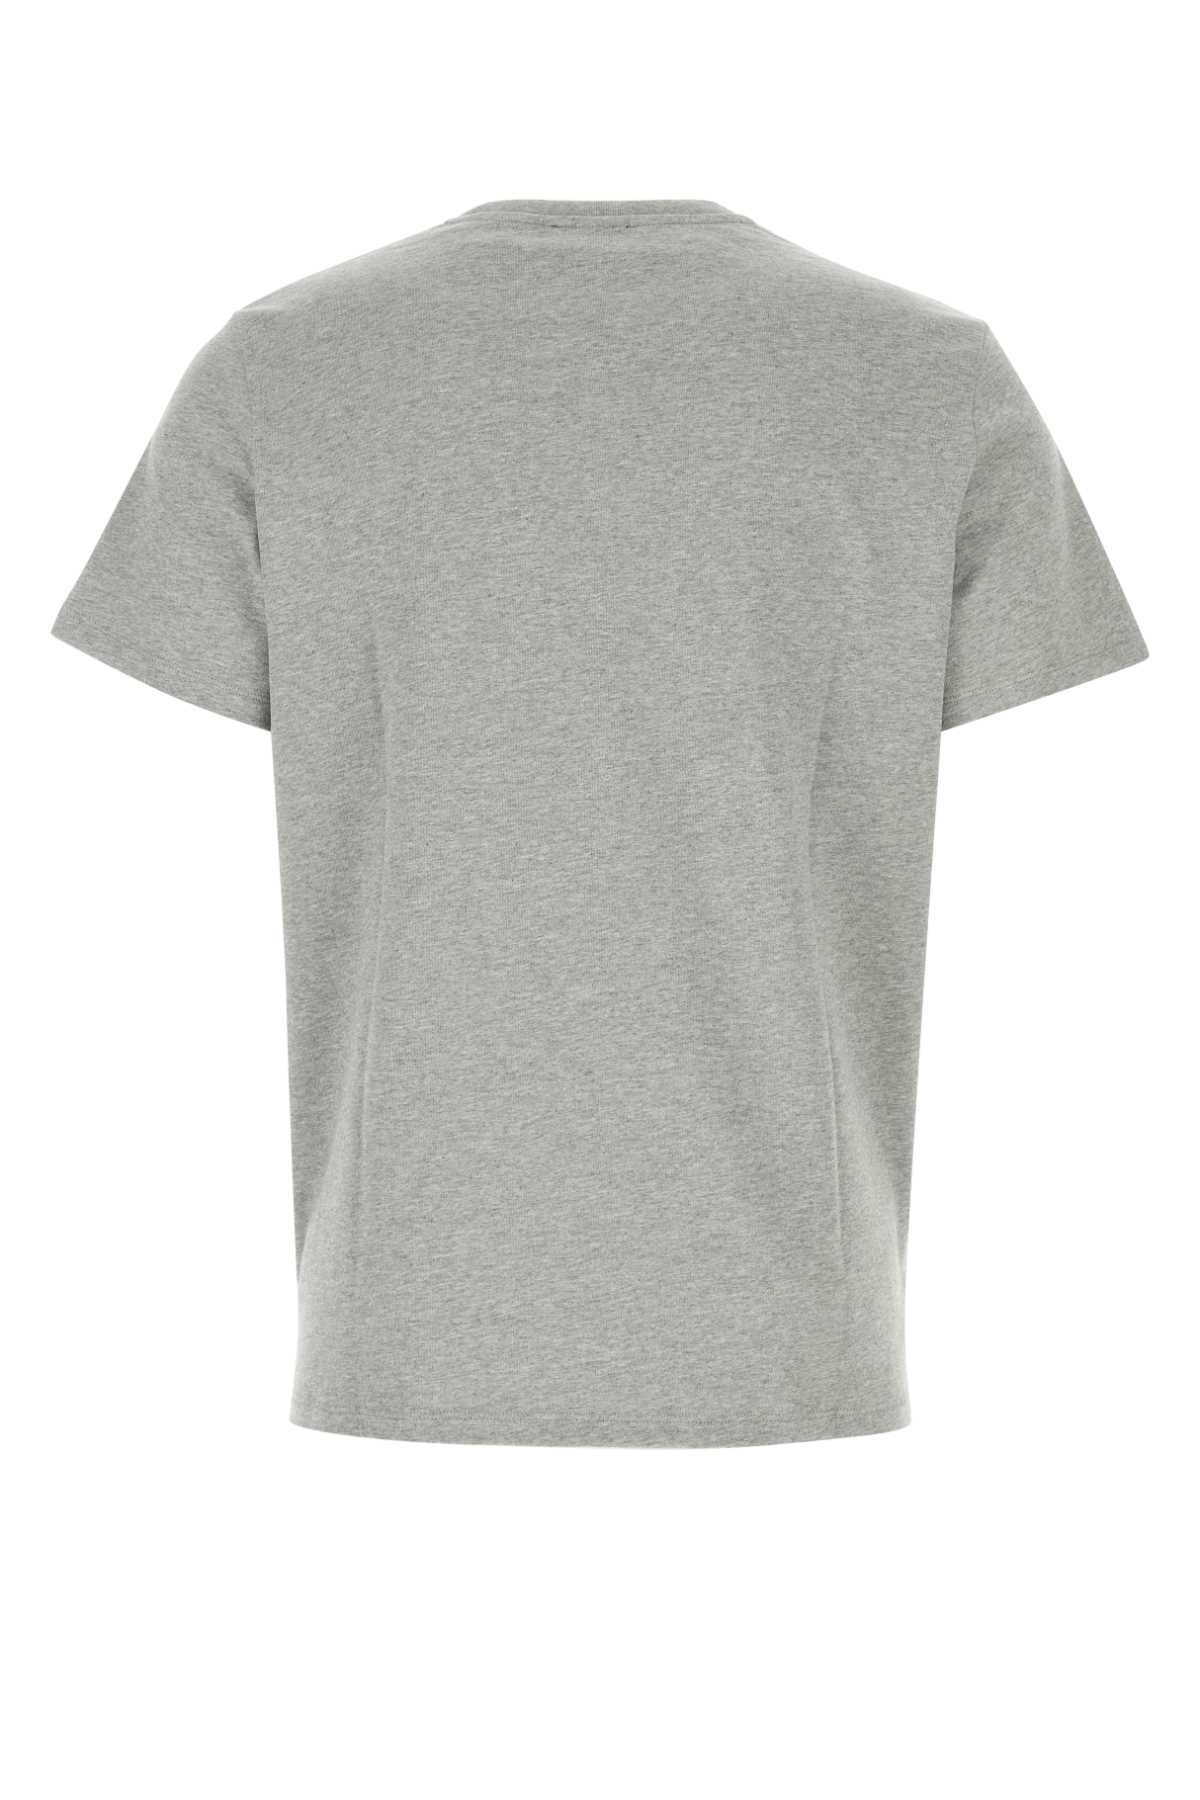 Apc Melange Grey Cotton T-shirt